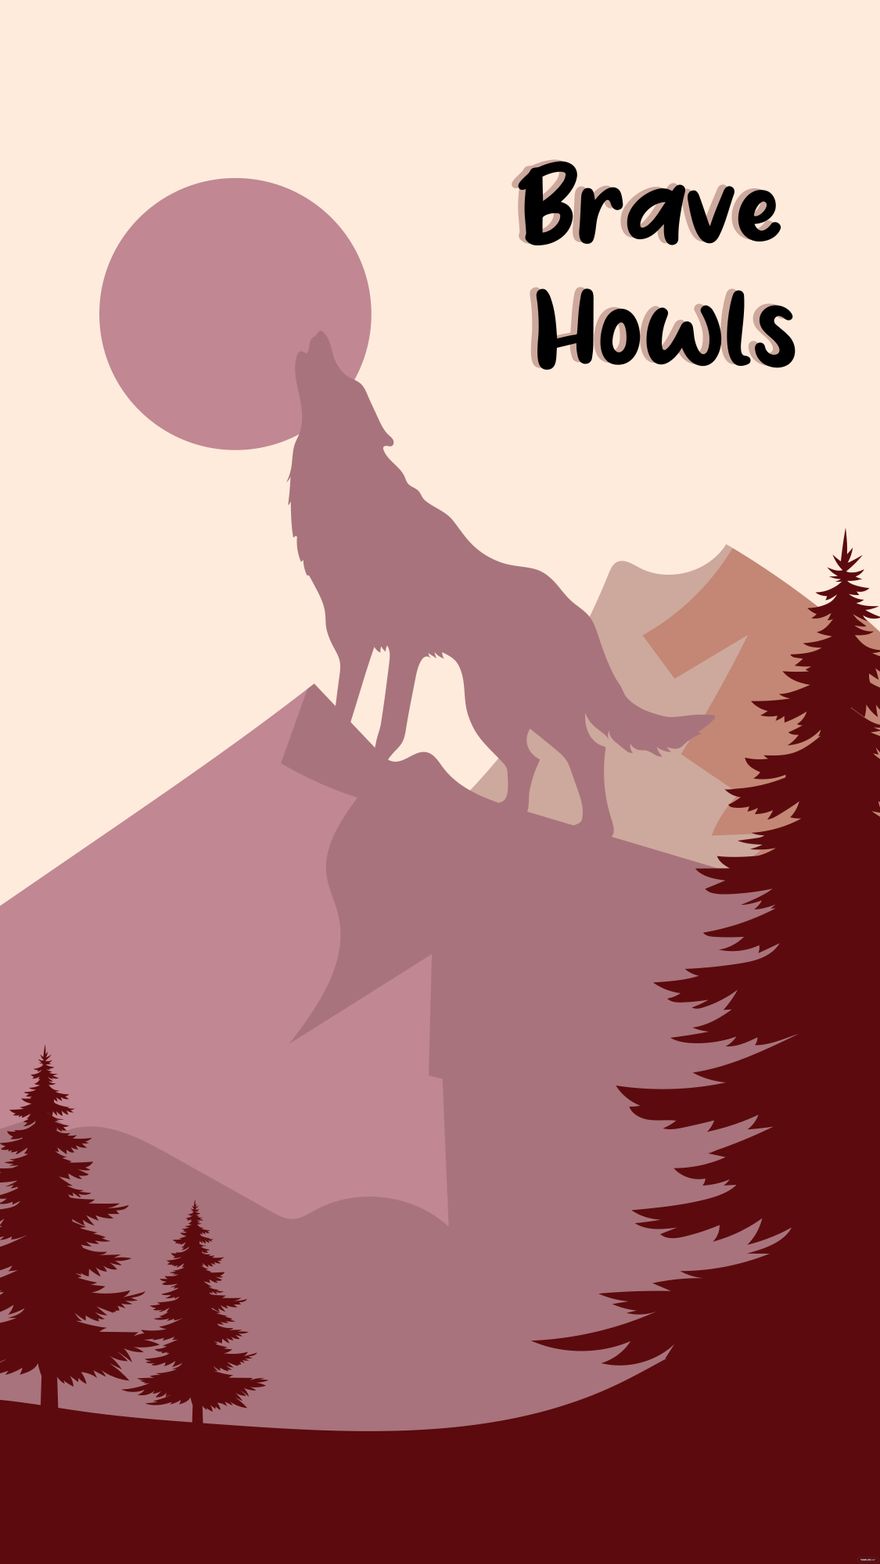 Free Wolf Phone Wallpaper in Illustrator, EPS, SVG, JPG, PNG